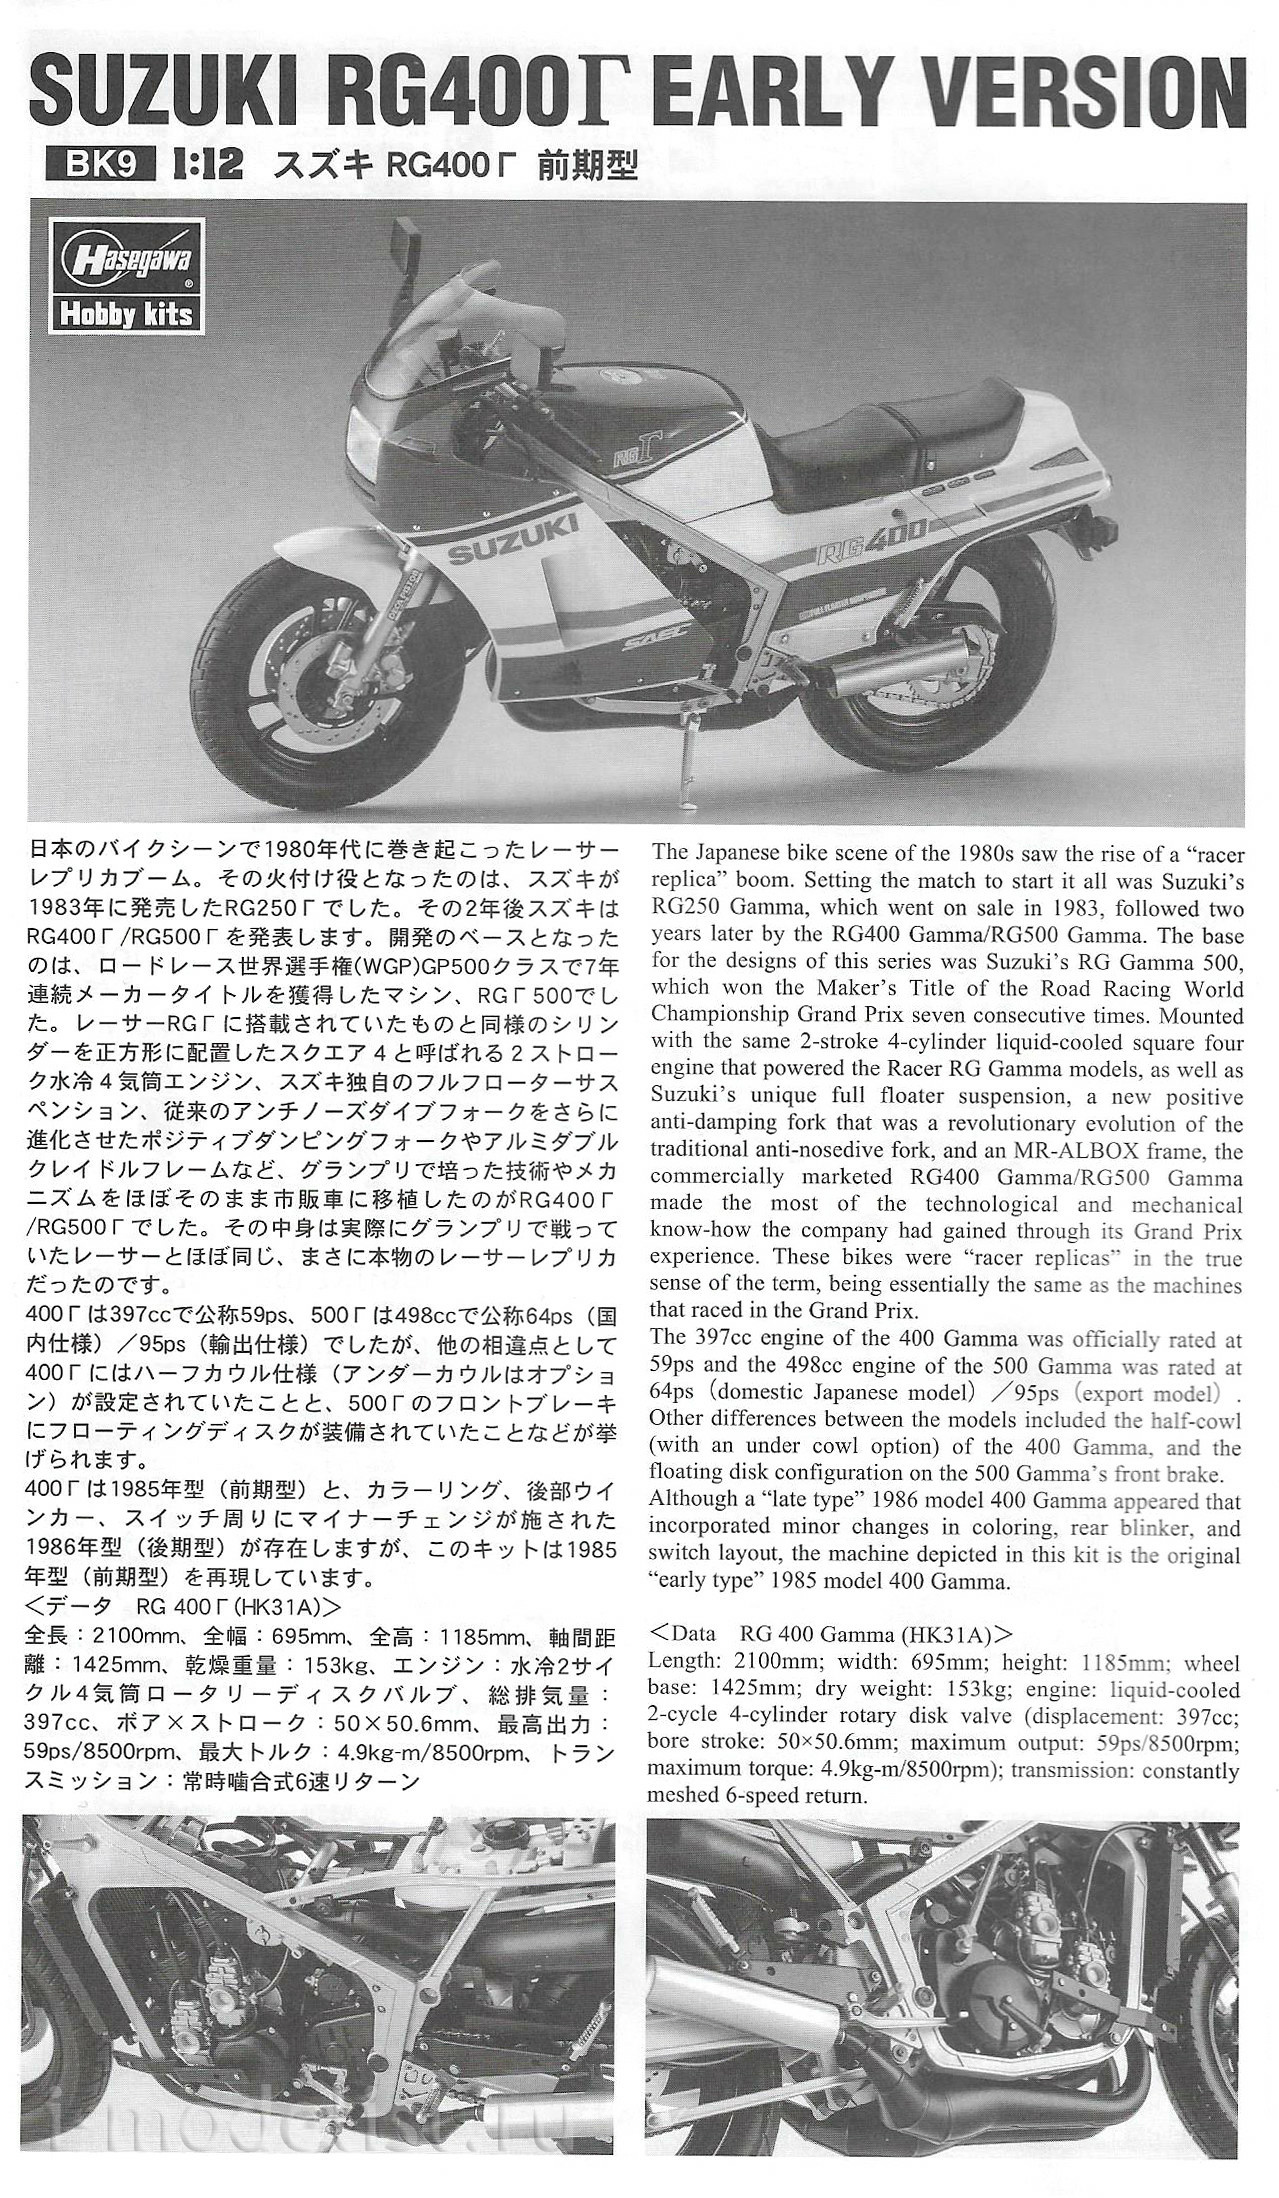 21509 Hasegawa 1/12 Мотоцикл Suzuki RG400 Gamma - Early Version (1985)